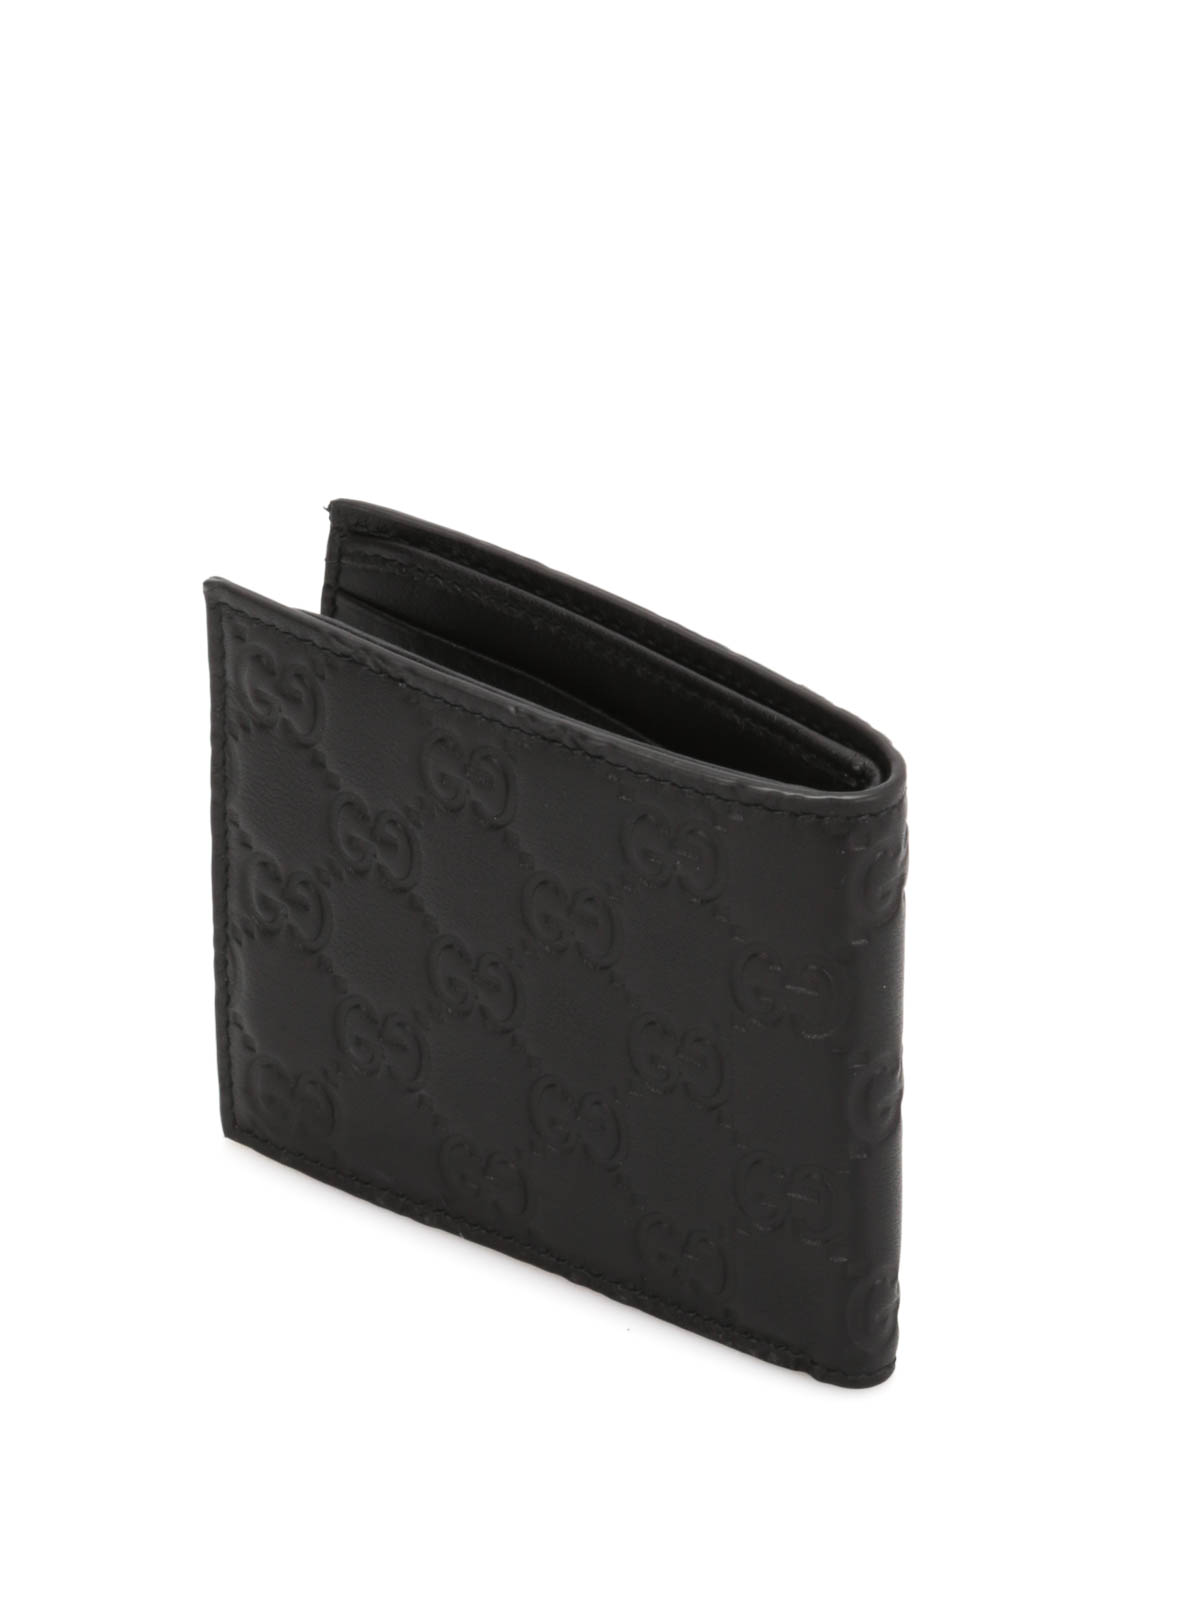 gucci bifold wallet microguccissima black